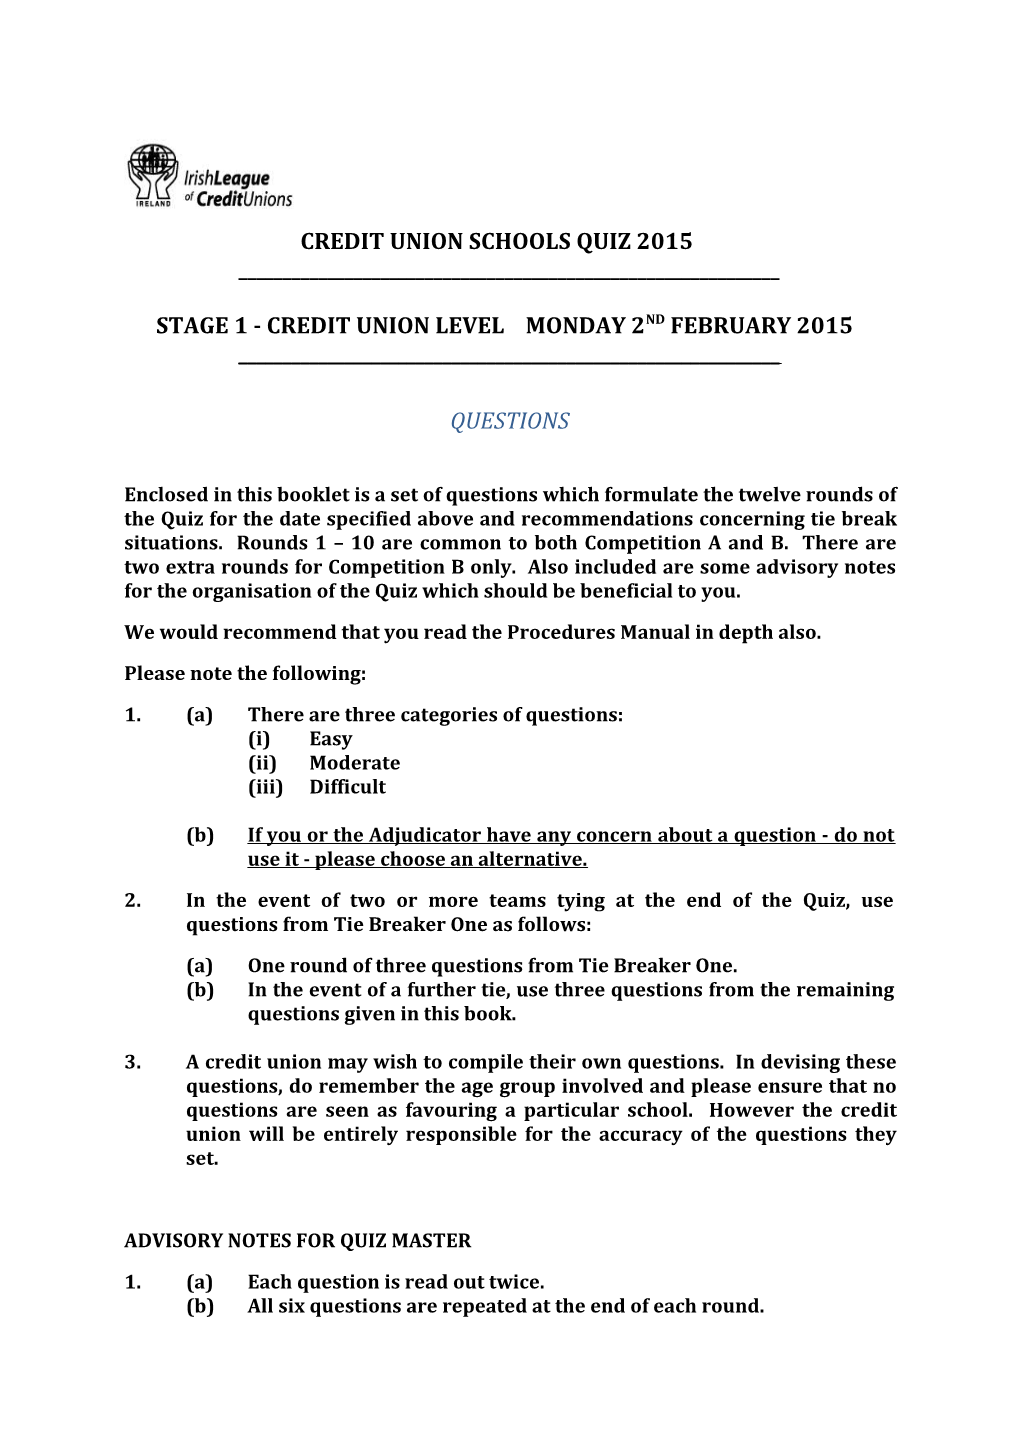 Stage 1 - Credit Union Level Monday 2Nd February 2015